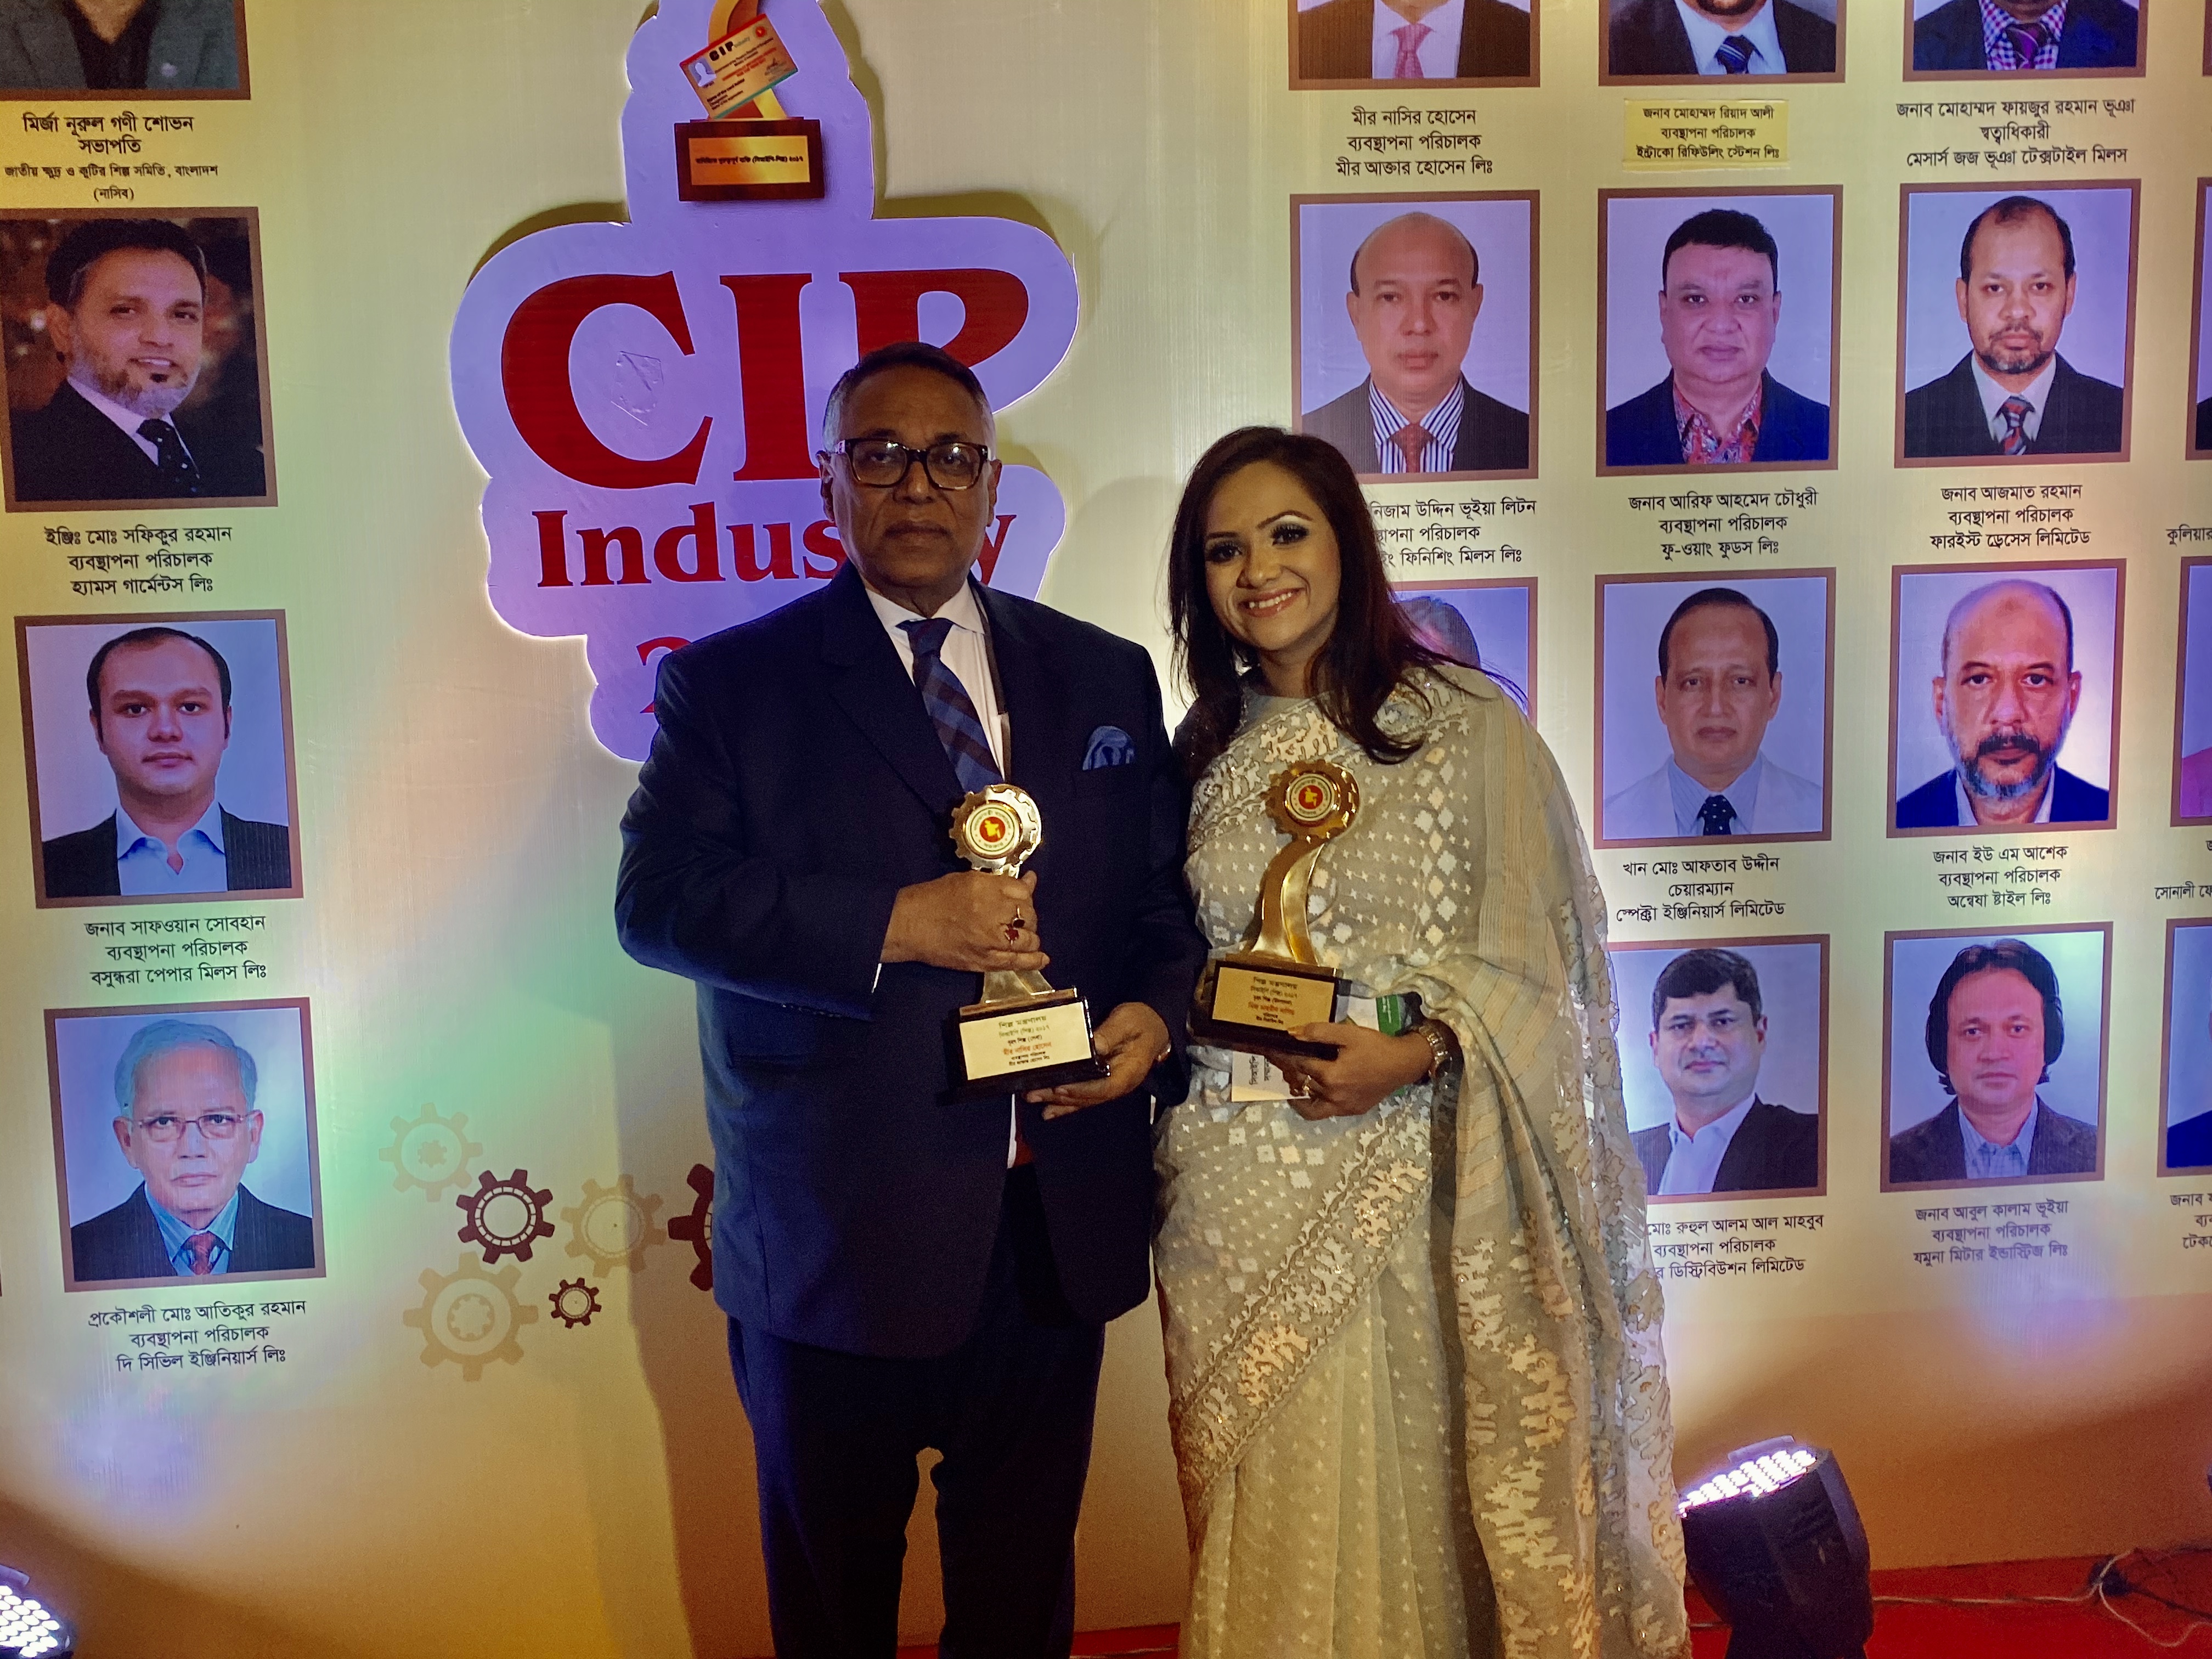 Mir Nasir Hossain, Managing Director, Mahreen Nasir, Director, Mir Ceramics Limited awarded prestigious Commercially Important Person (CIP) award